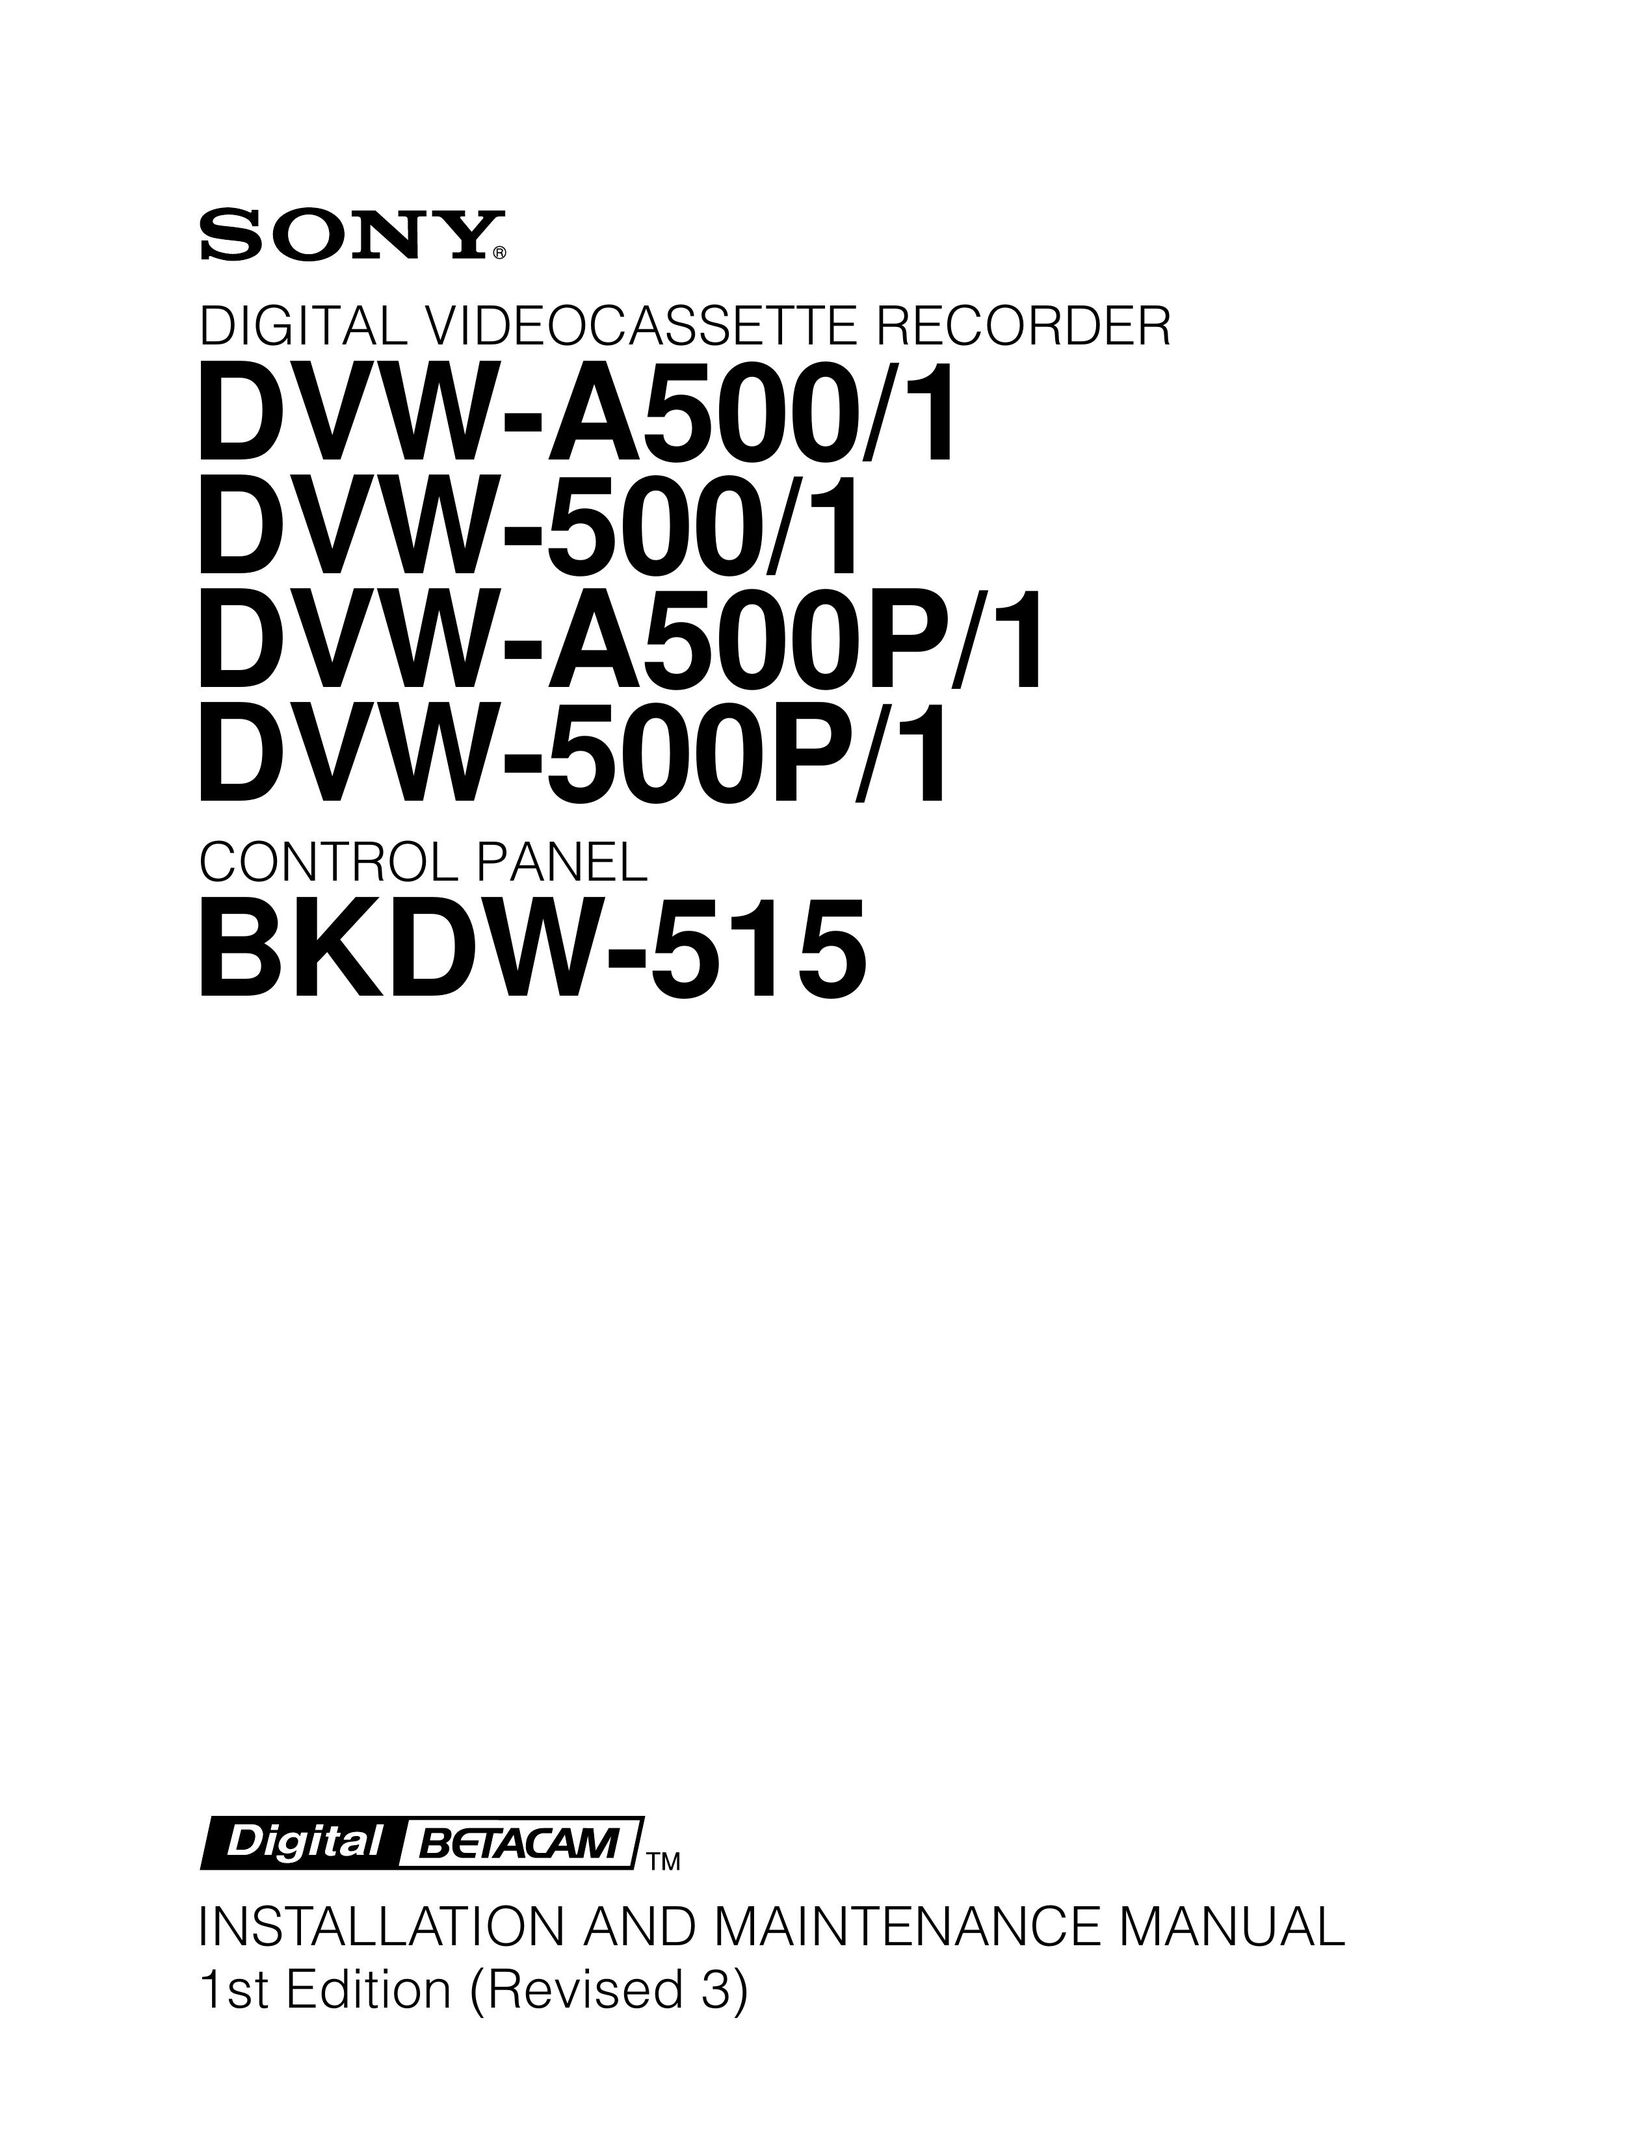 Sony DVW-500P/1 VCR User Manual